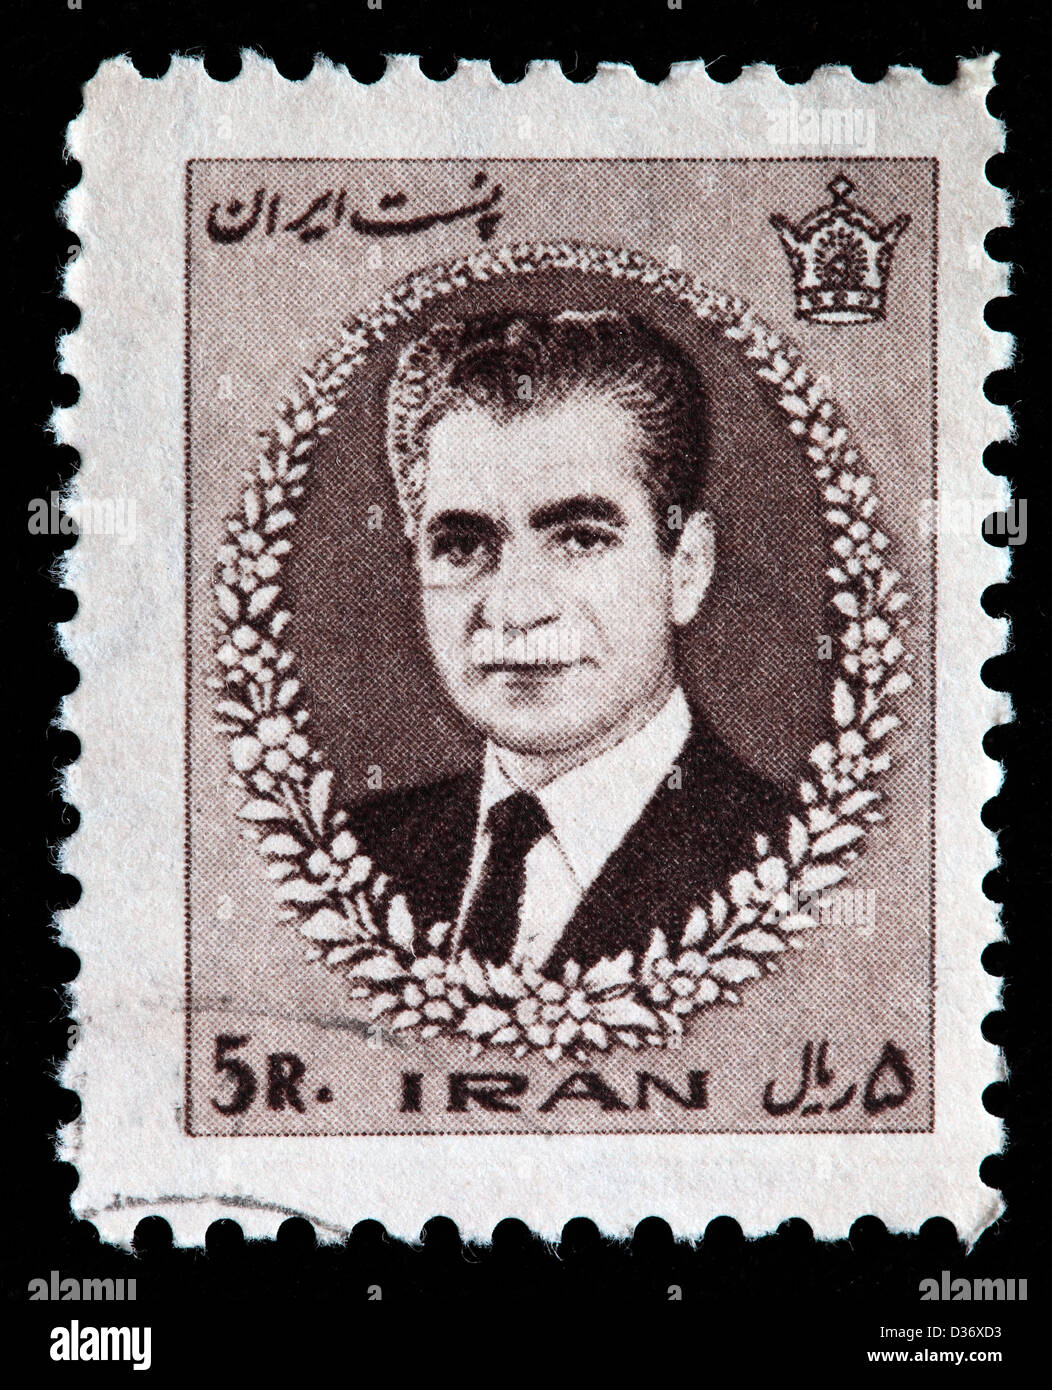 Mohammad Reza Shah Pahlavi, postage stamp, Iran, 1966 Stock Photo